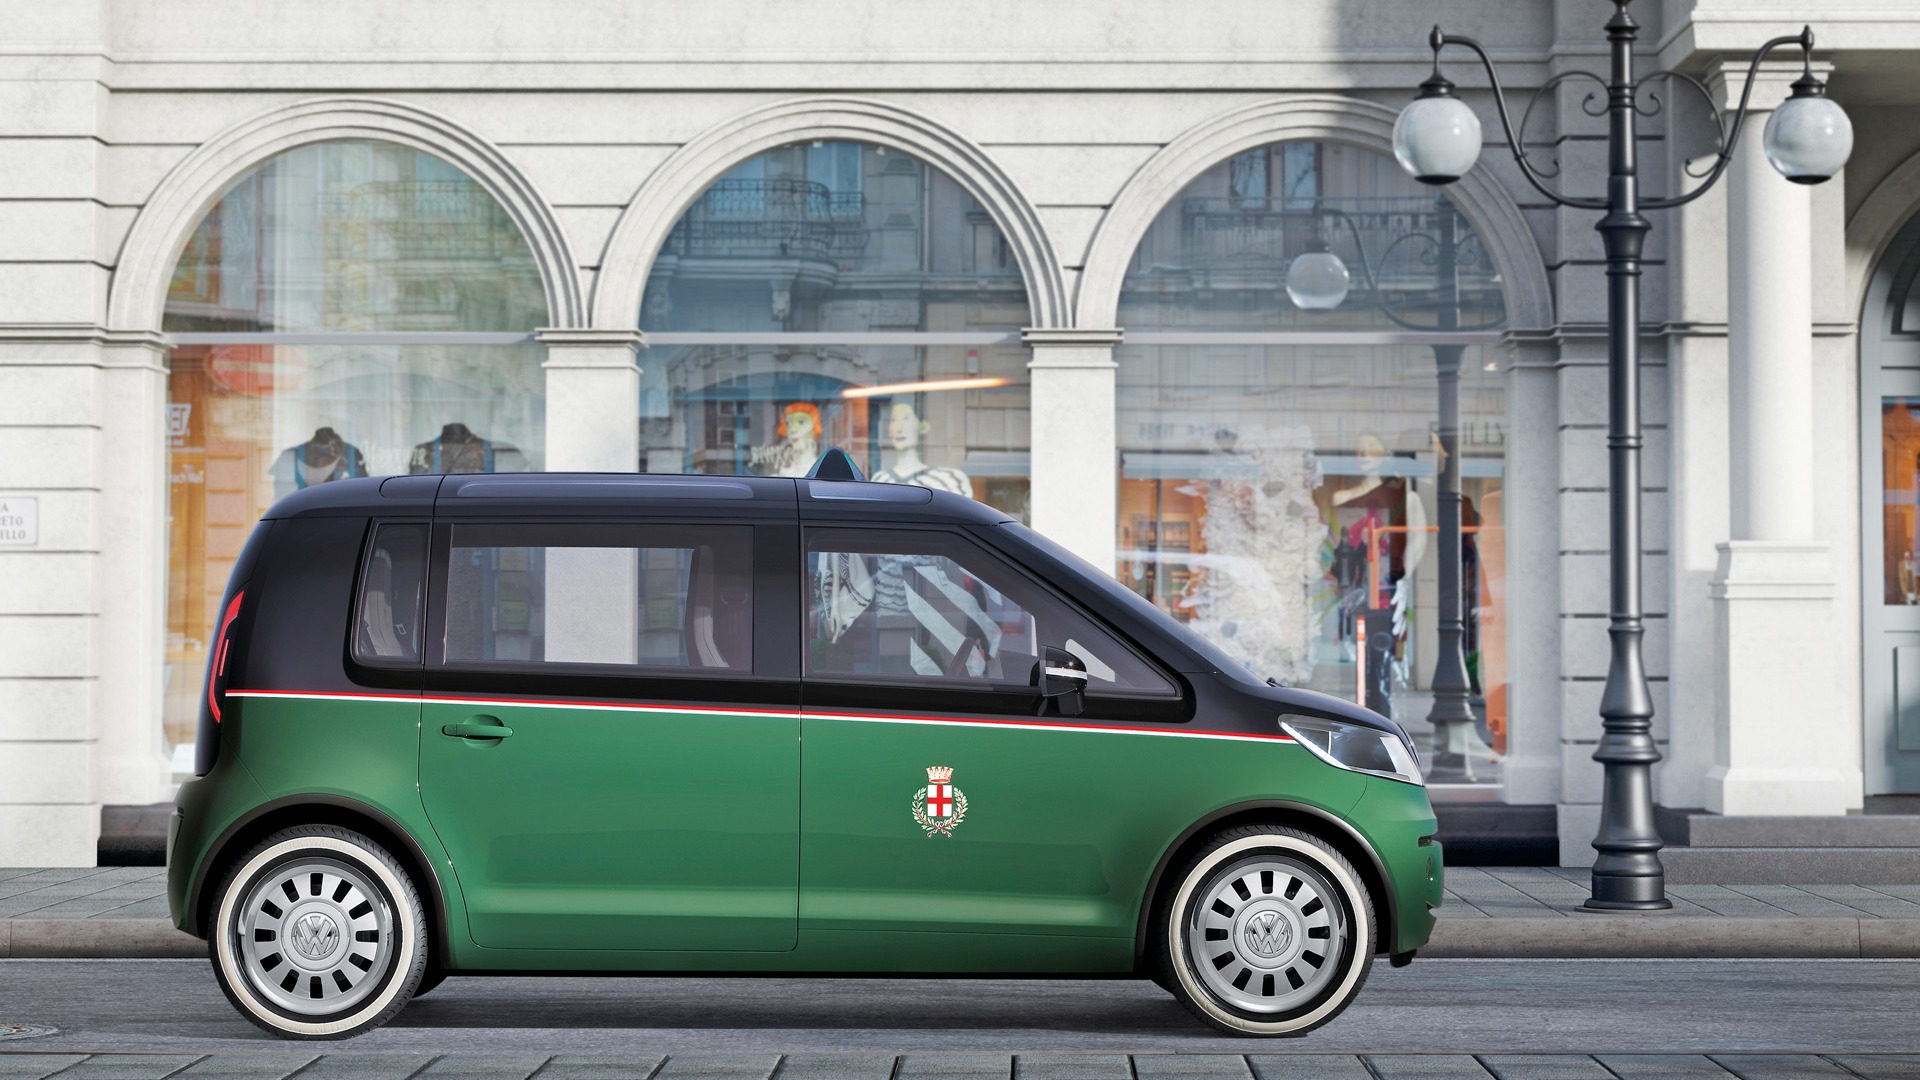 Concept Car Volkswagen Milano Taxi - 2010 大众6 - 1920x1080